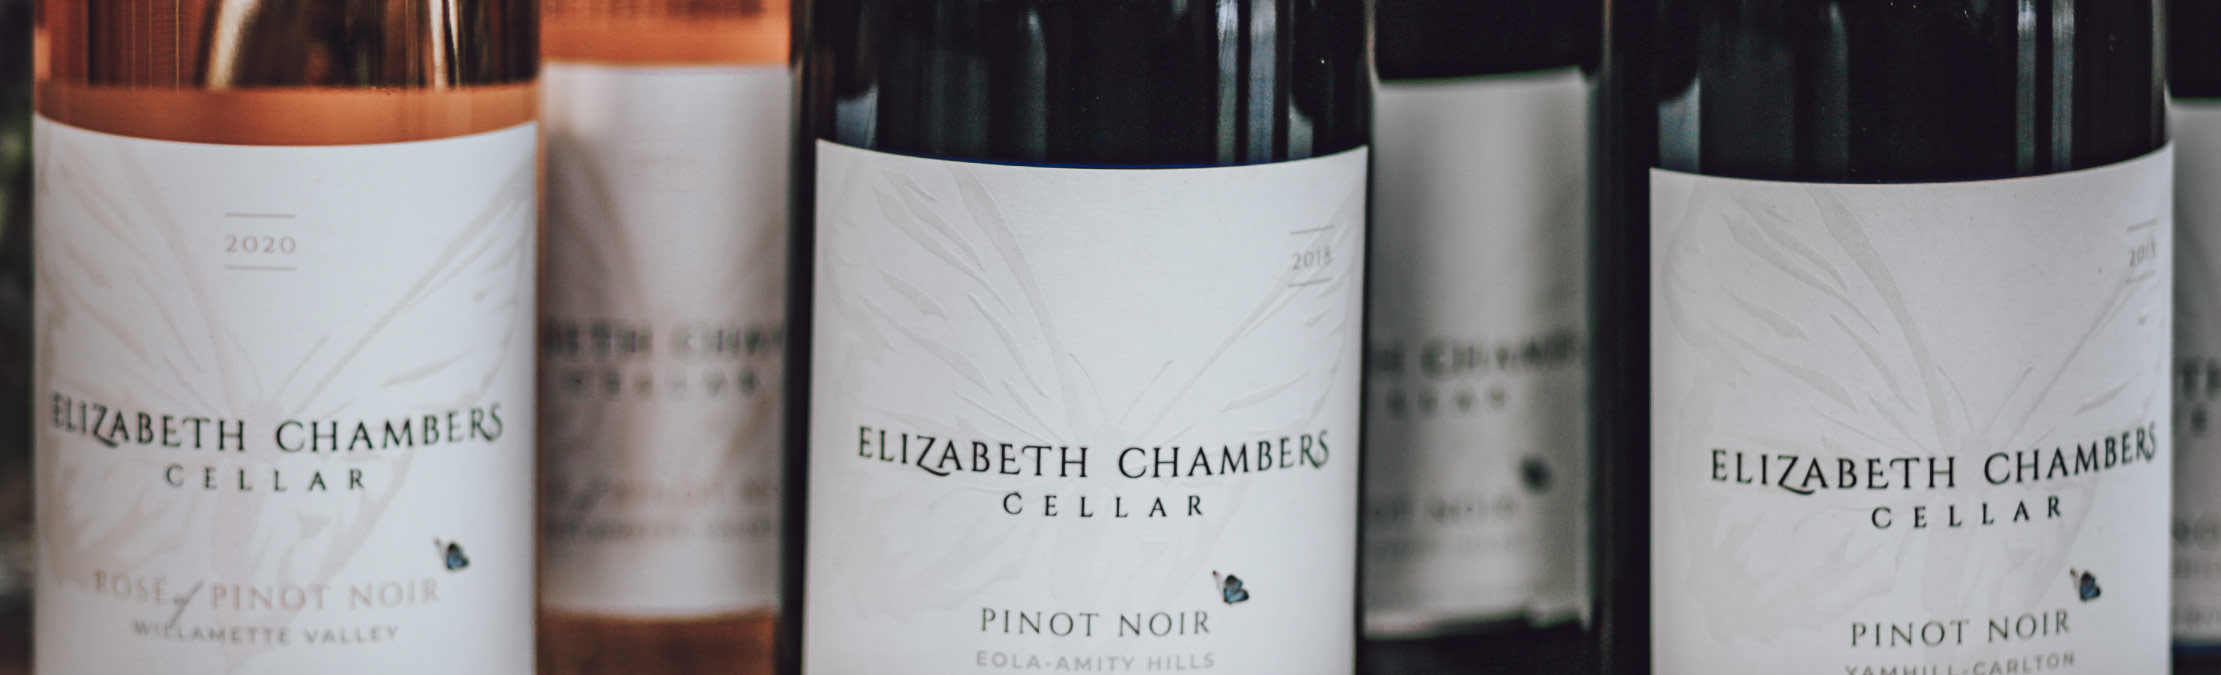 Elizabeth Chambers Cellar Wines 